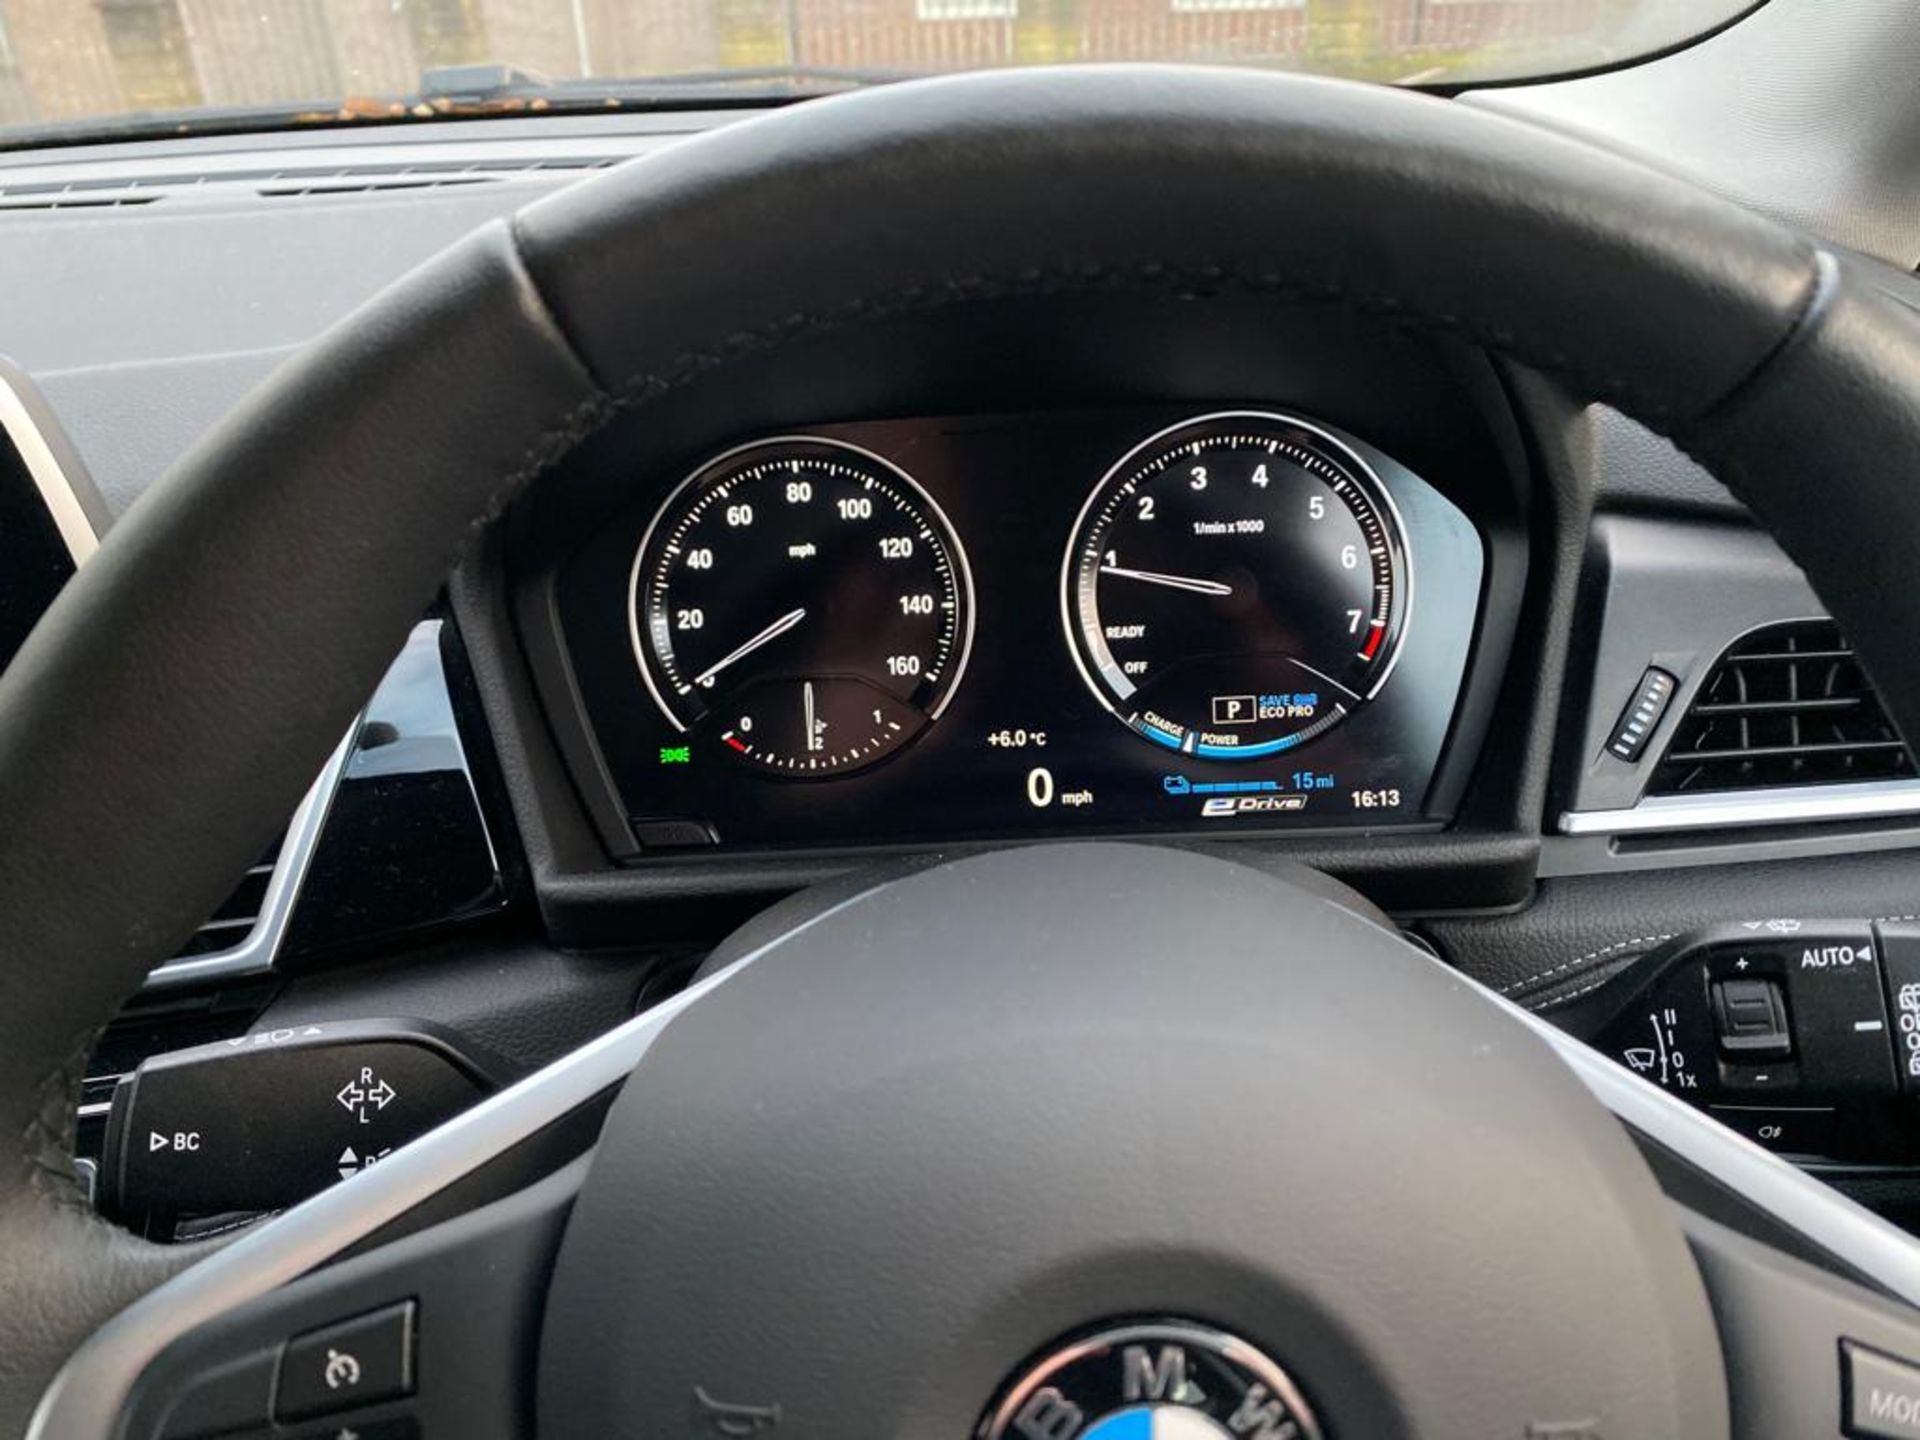 2019/68 REG BMW 225XE SPORT PREMIUM AUTOMATIC 1.5 HYBRID ELECTRIC SILVER 5 DOOR HATCHBACK *PLUS VAT* - Image 15 of 17